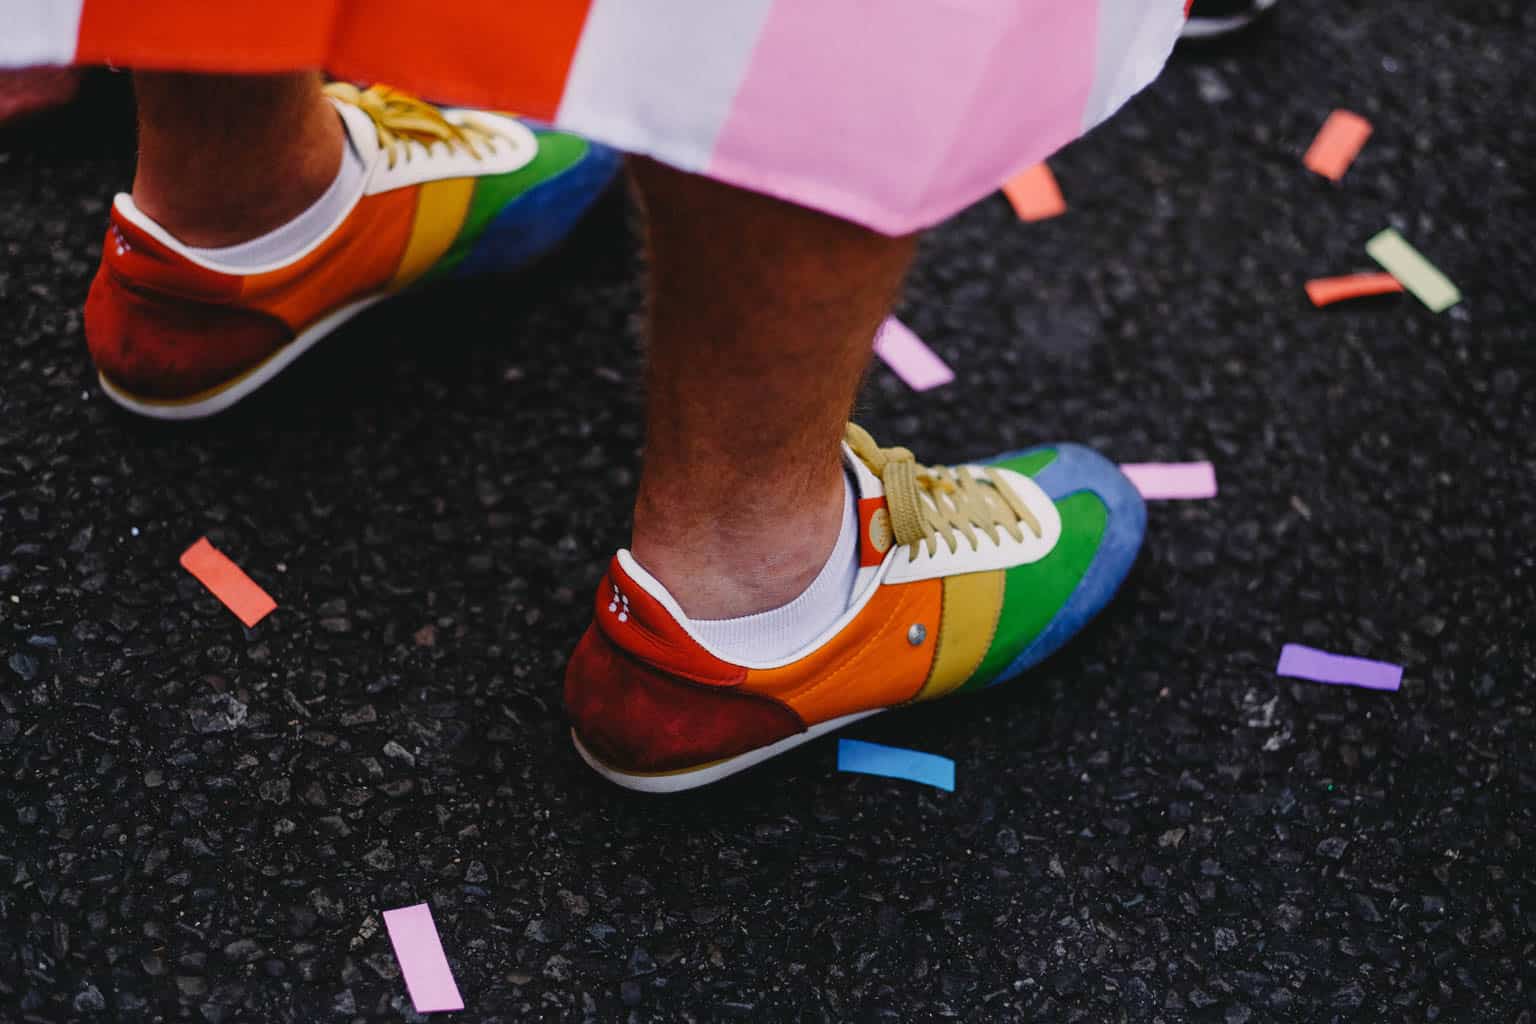 Rainbow tennis shoes.